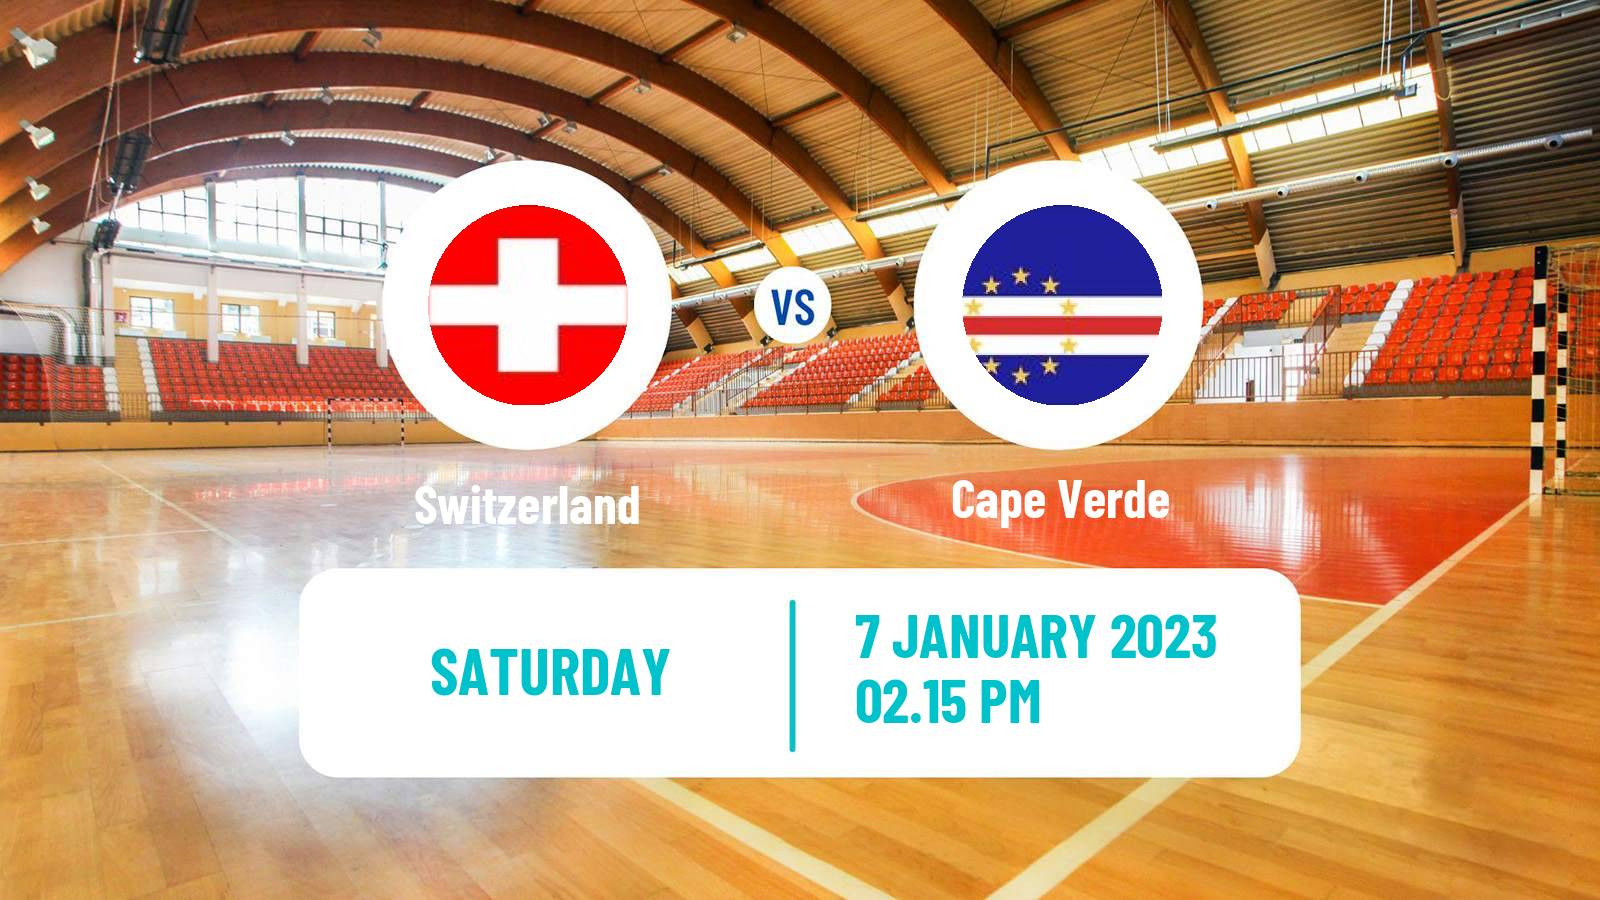 Handball Friendly International Handball Switzerland - Cape Verde